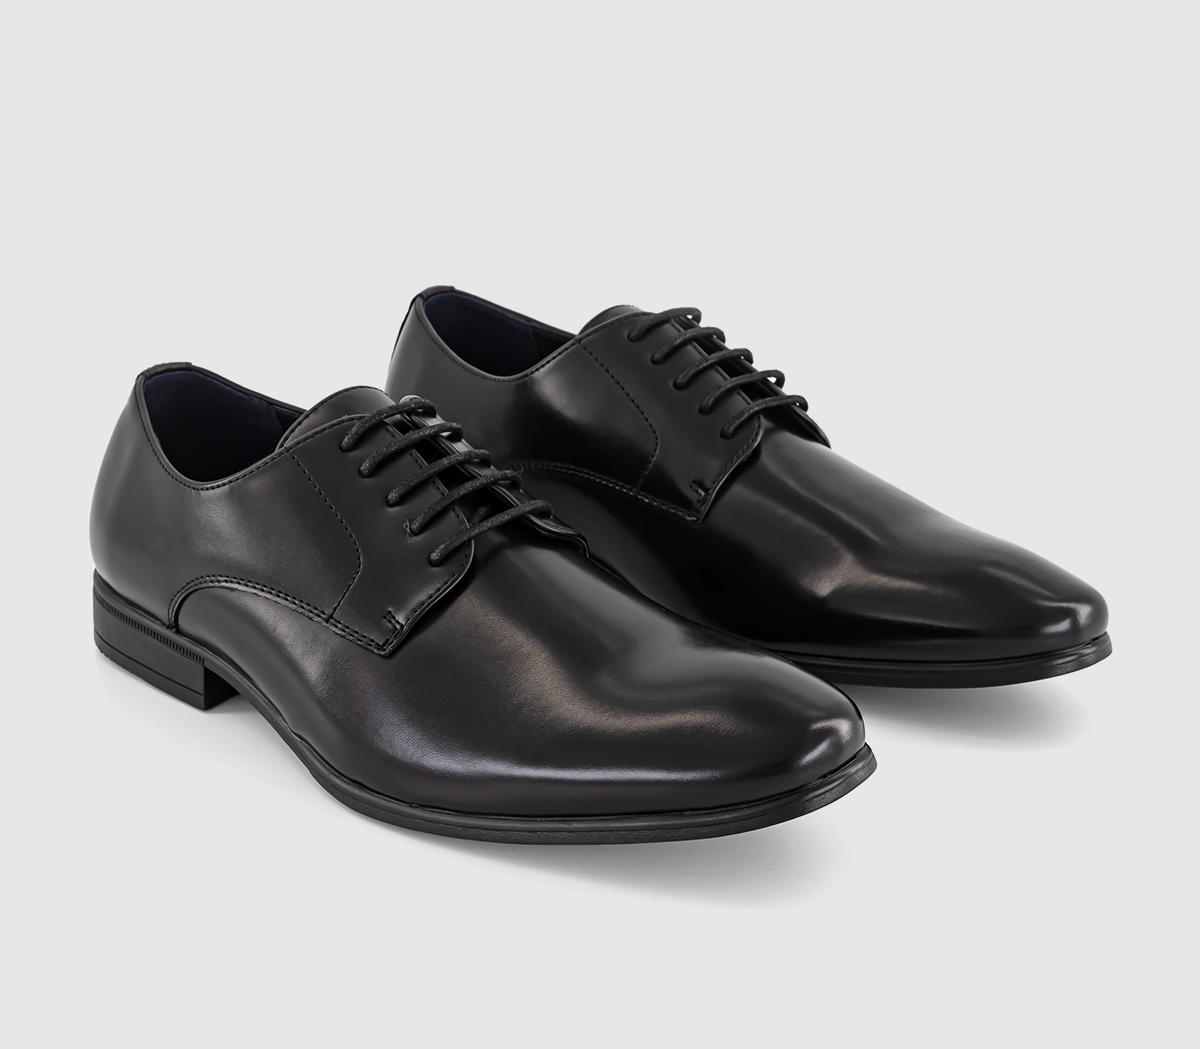 OFFICE Mayford Comfort Derby Shoes Black - Men’s Smart Shoes